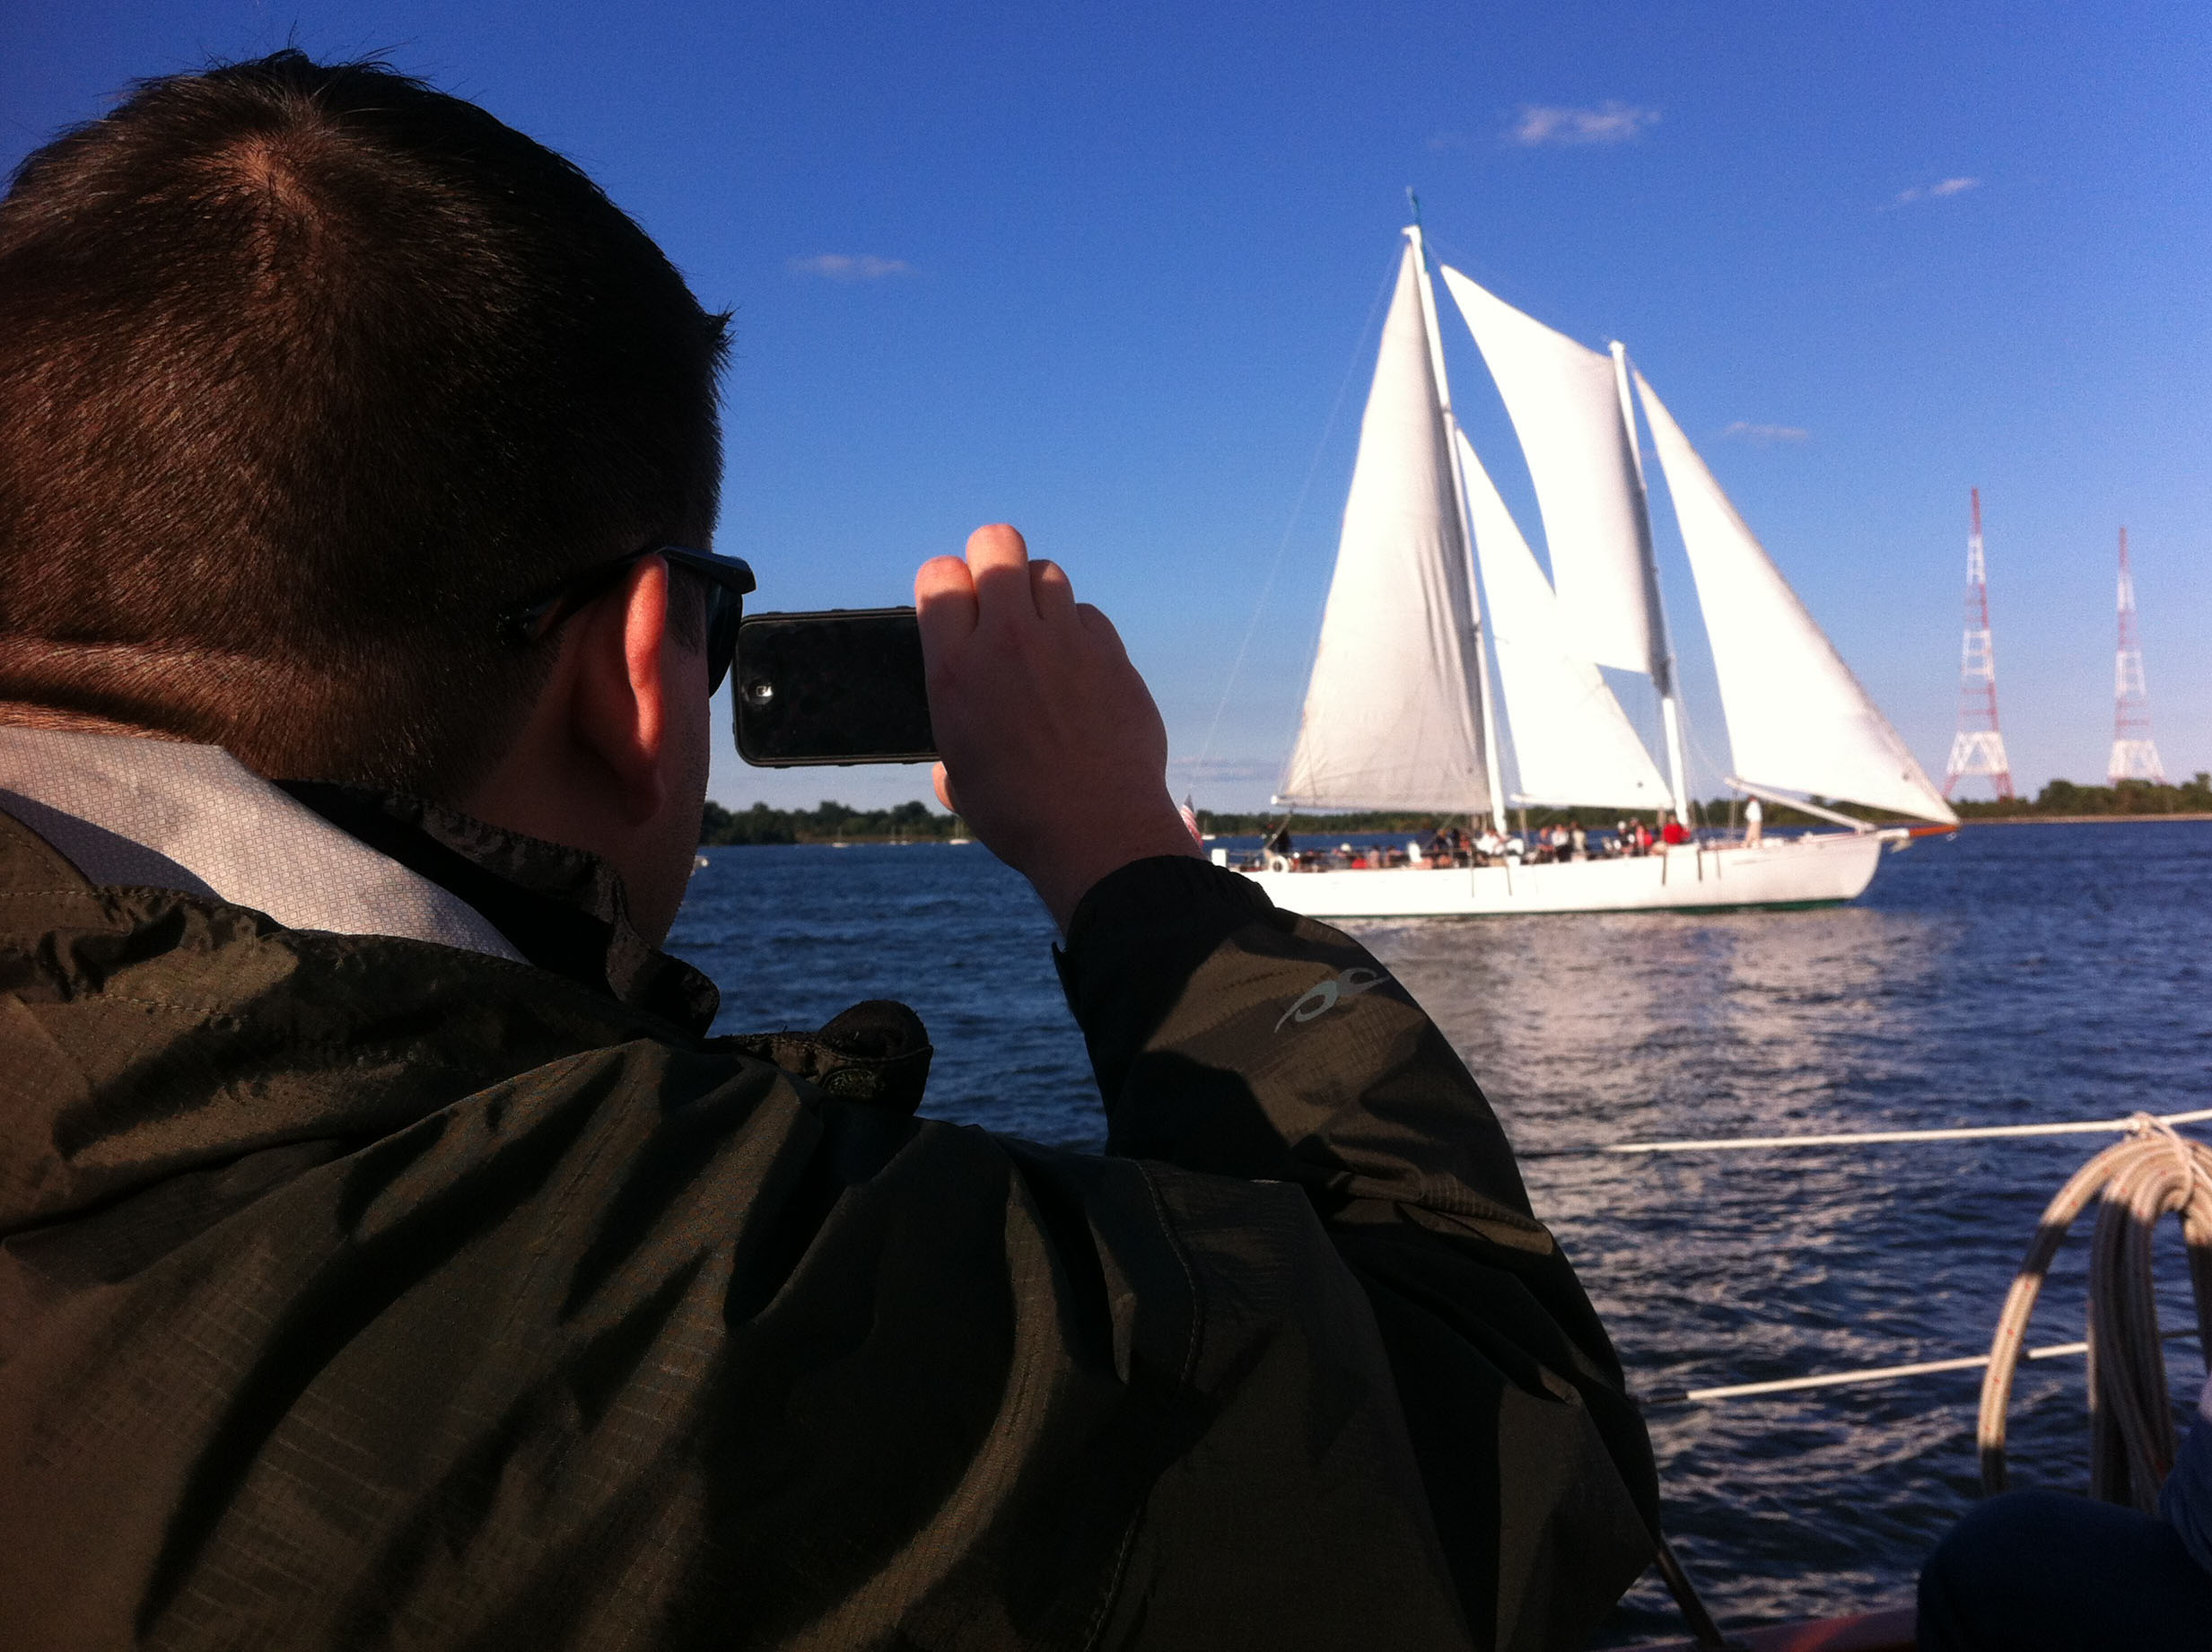 Man taking picture of schooner from other schooner on his phone